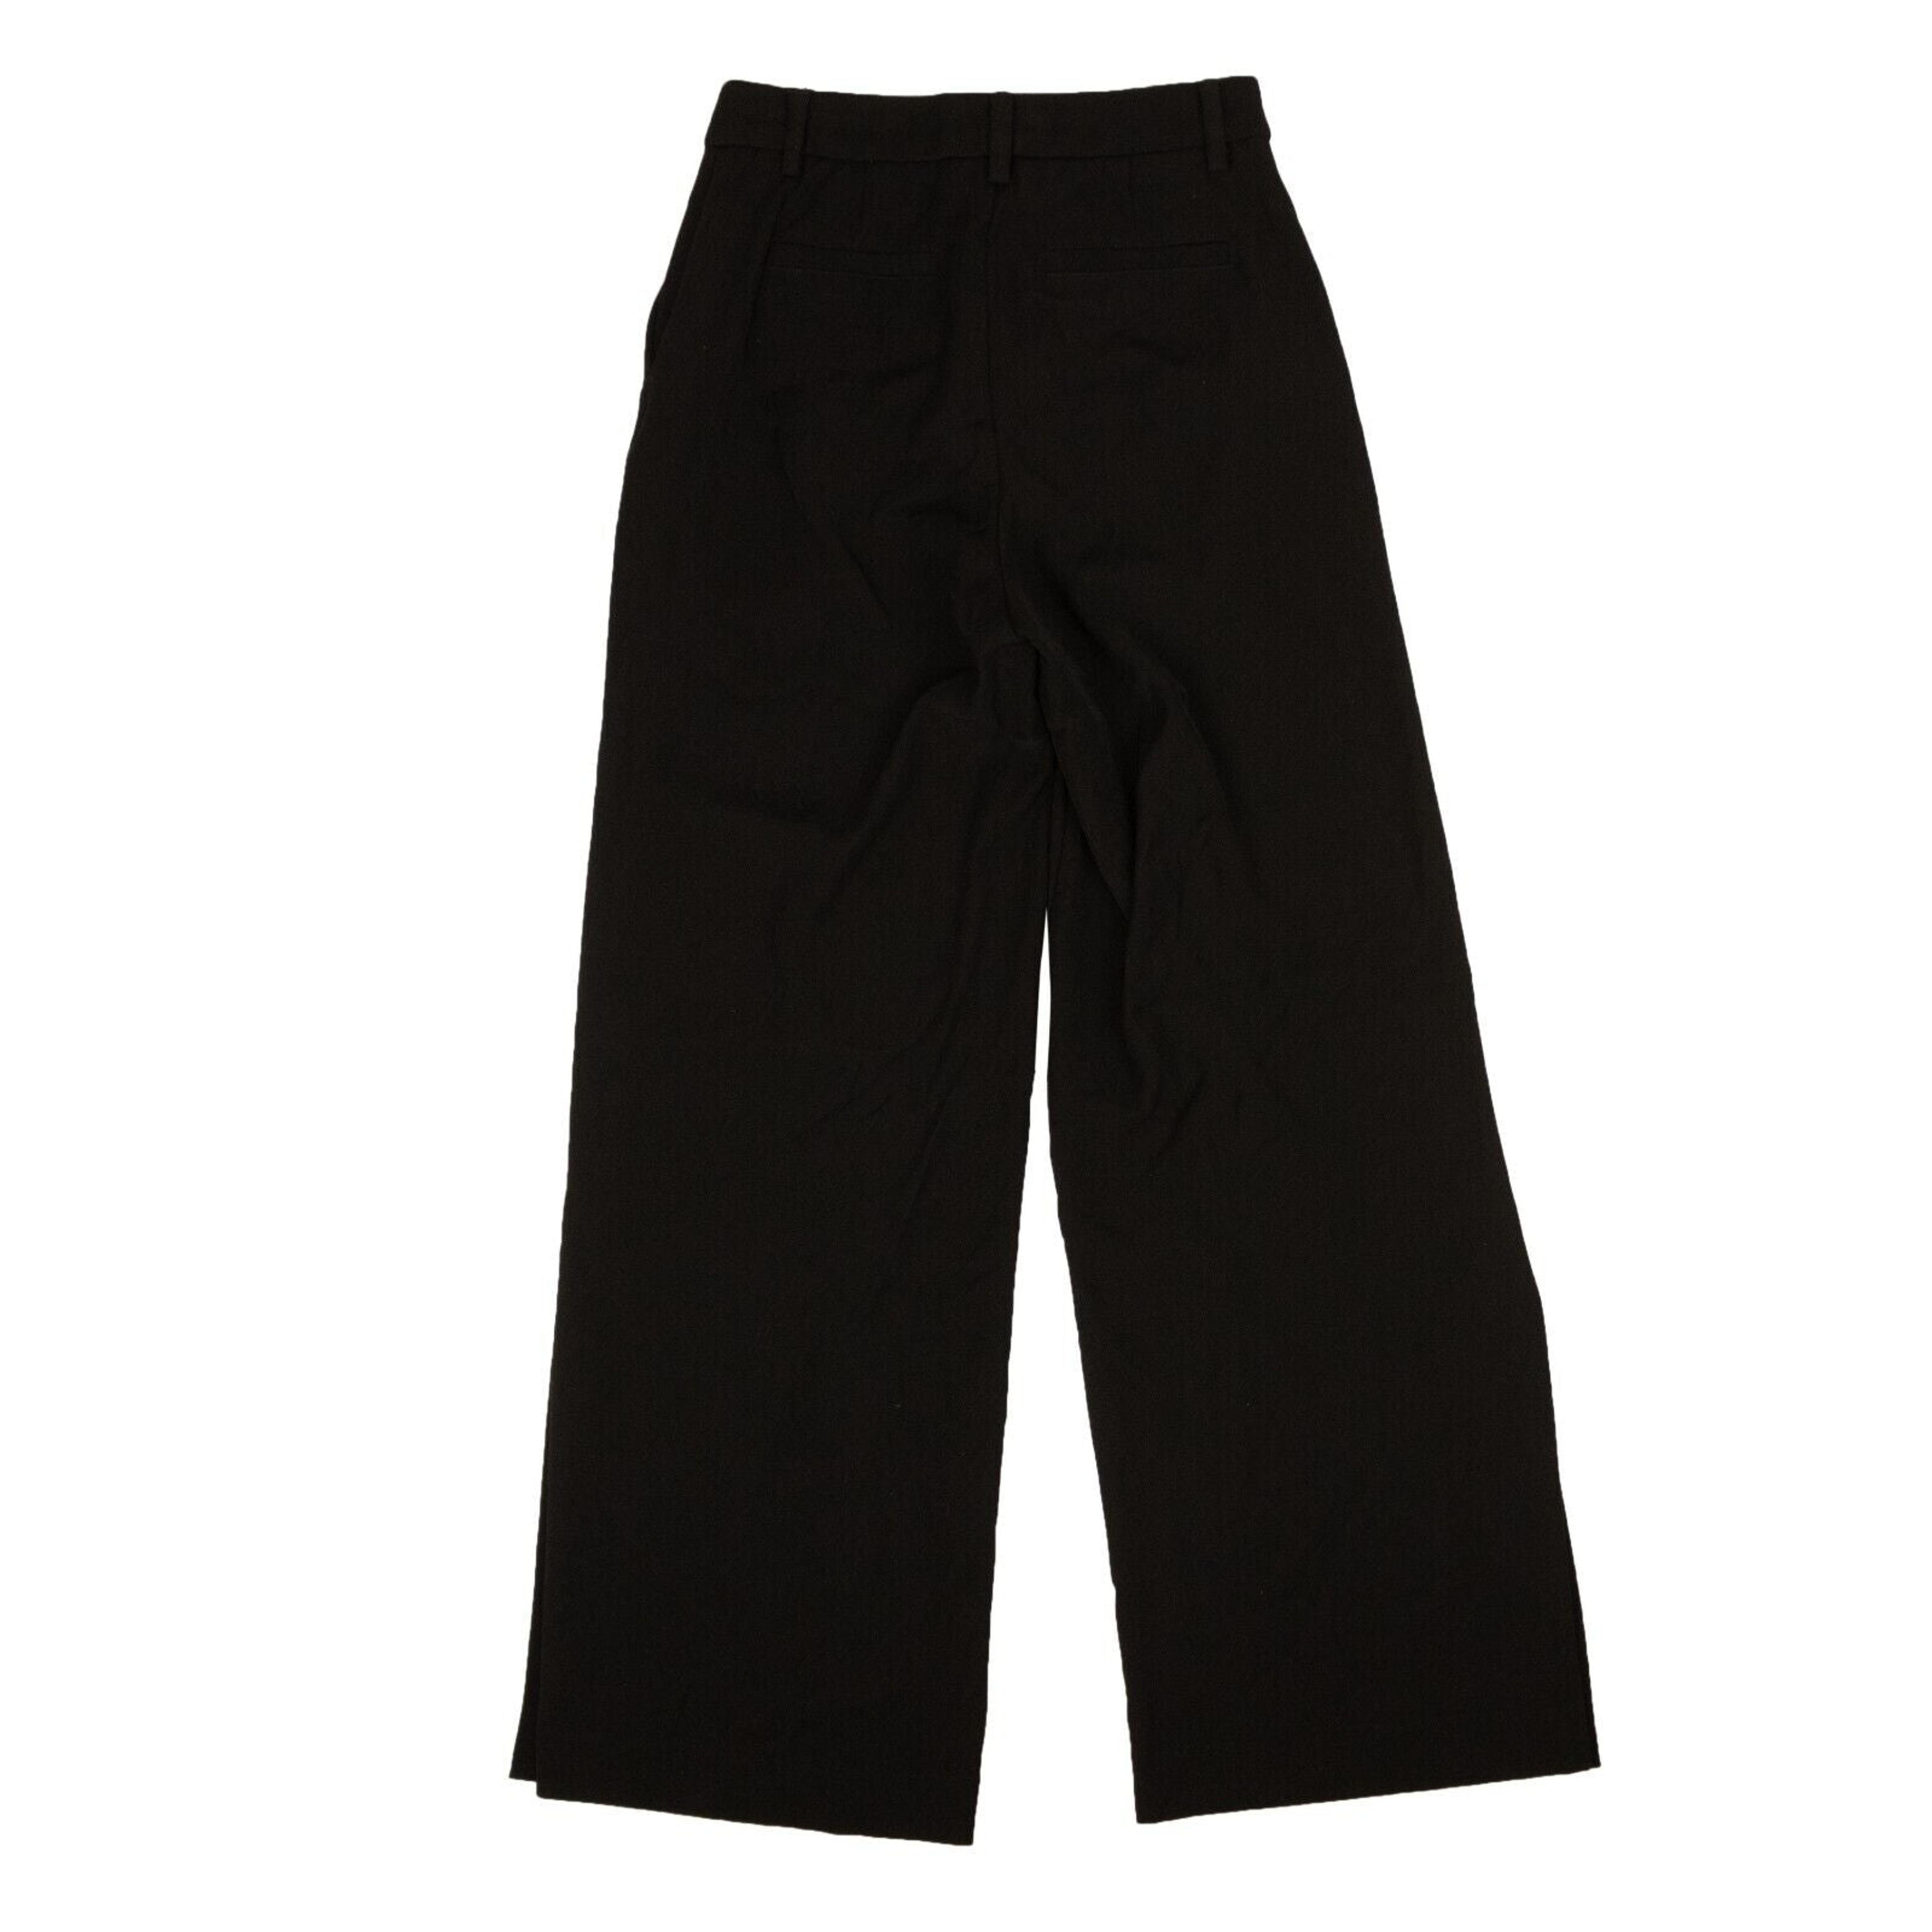 Alternate View 2 of Black Polyester Side Slit Straight Pants